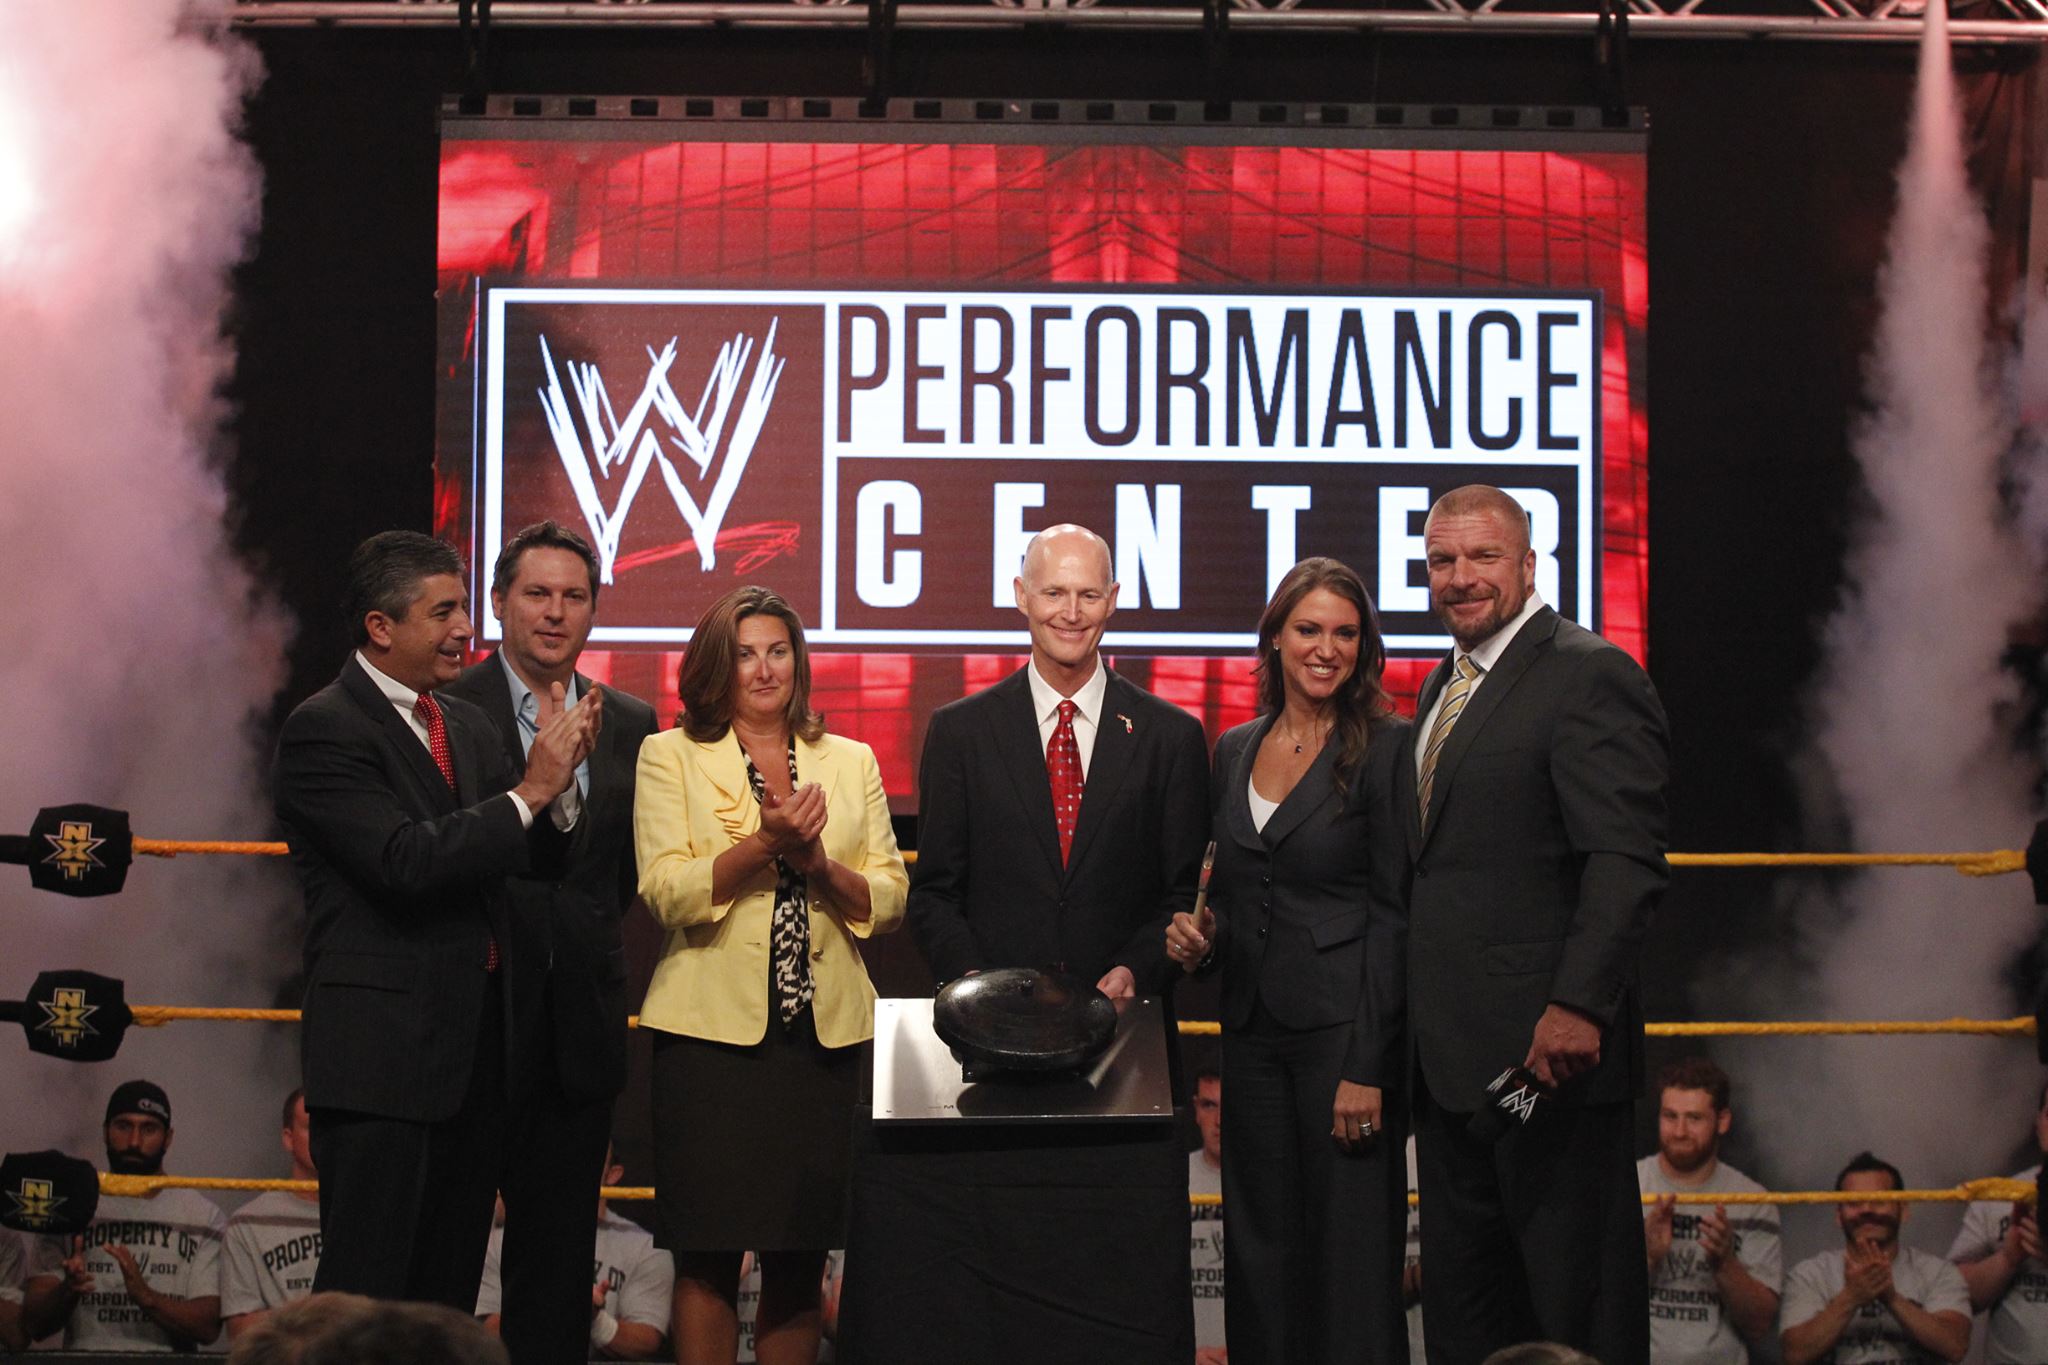 WWE opens New Performance Center in Orlando, Florida #WWEMoms 2